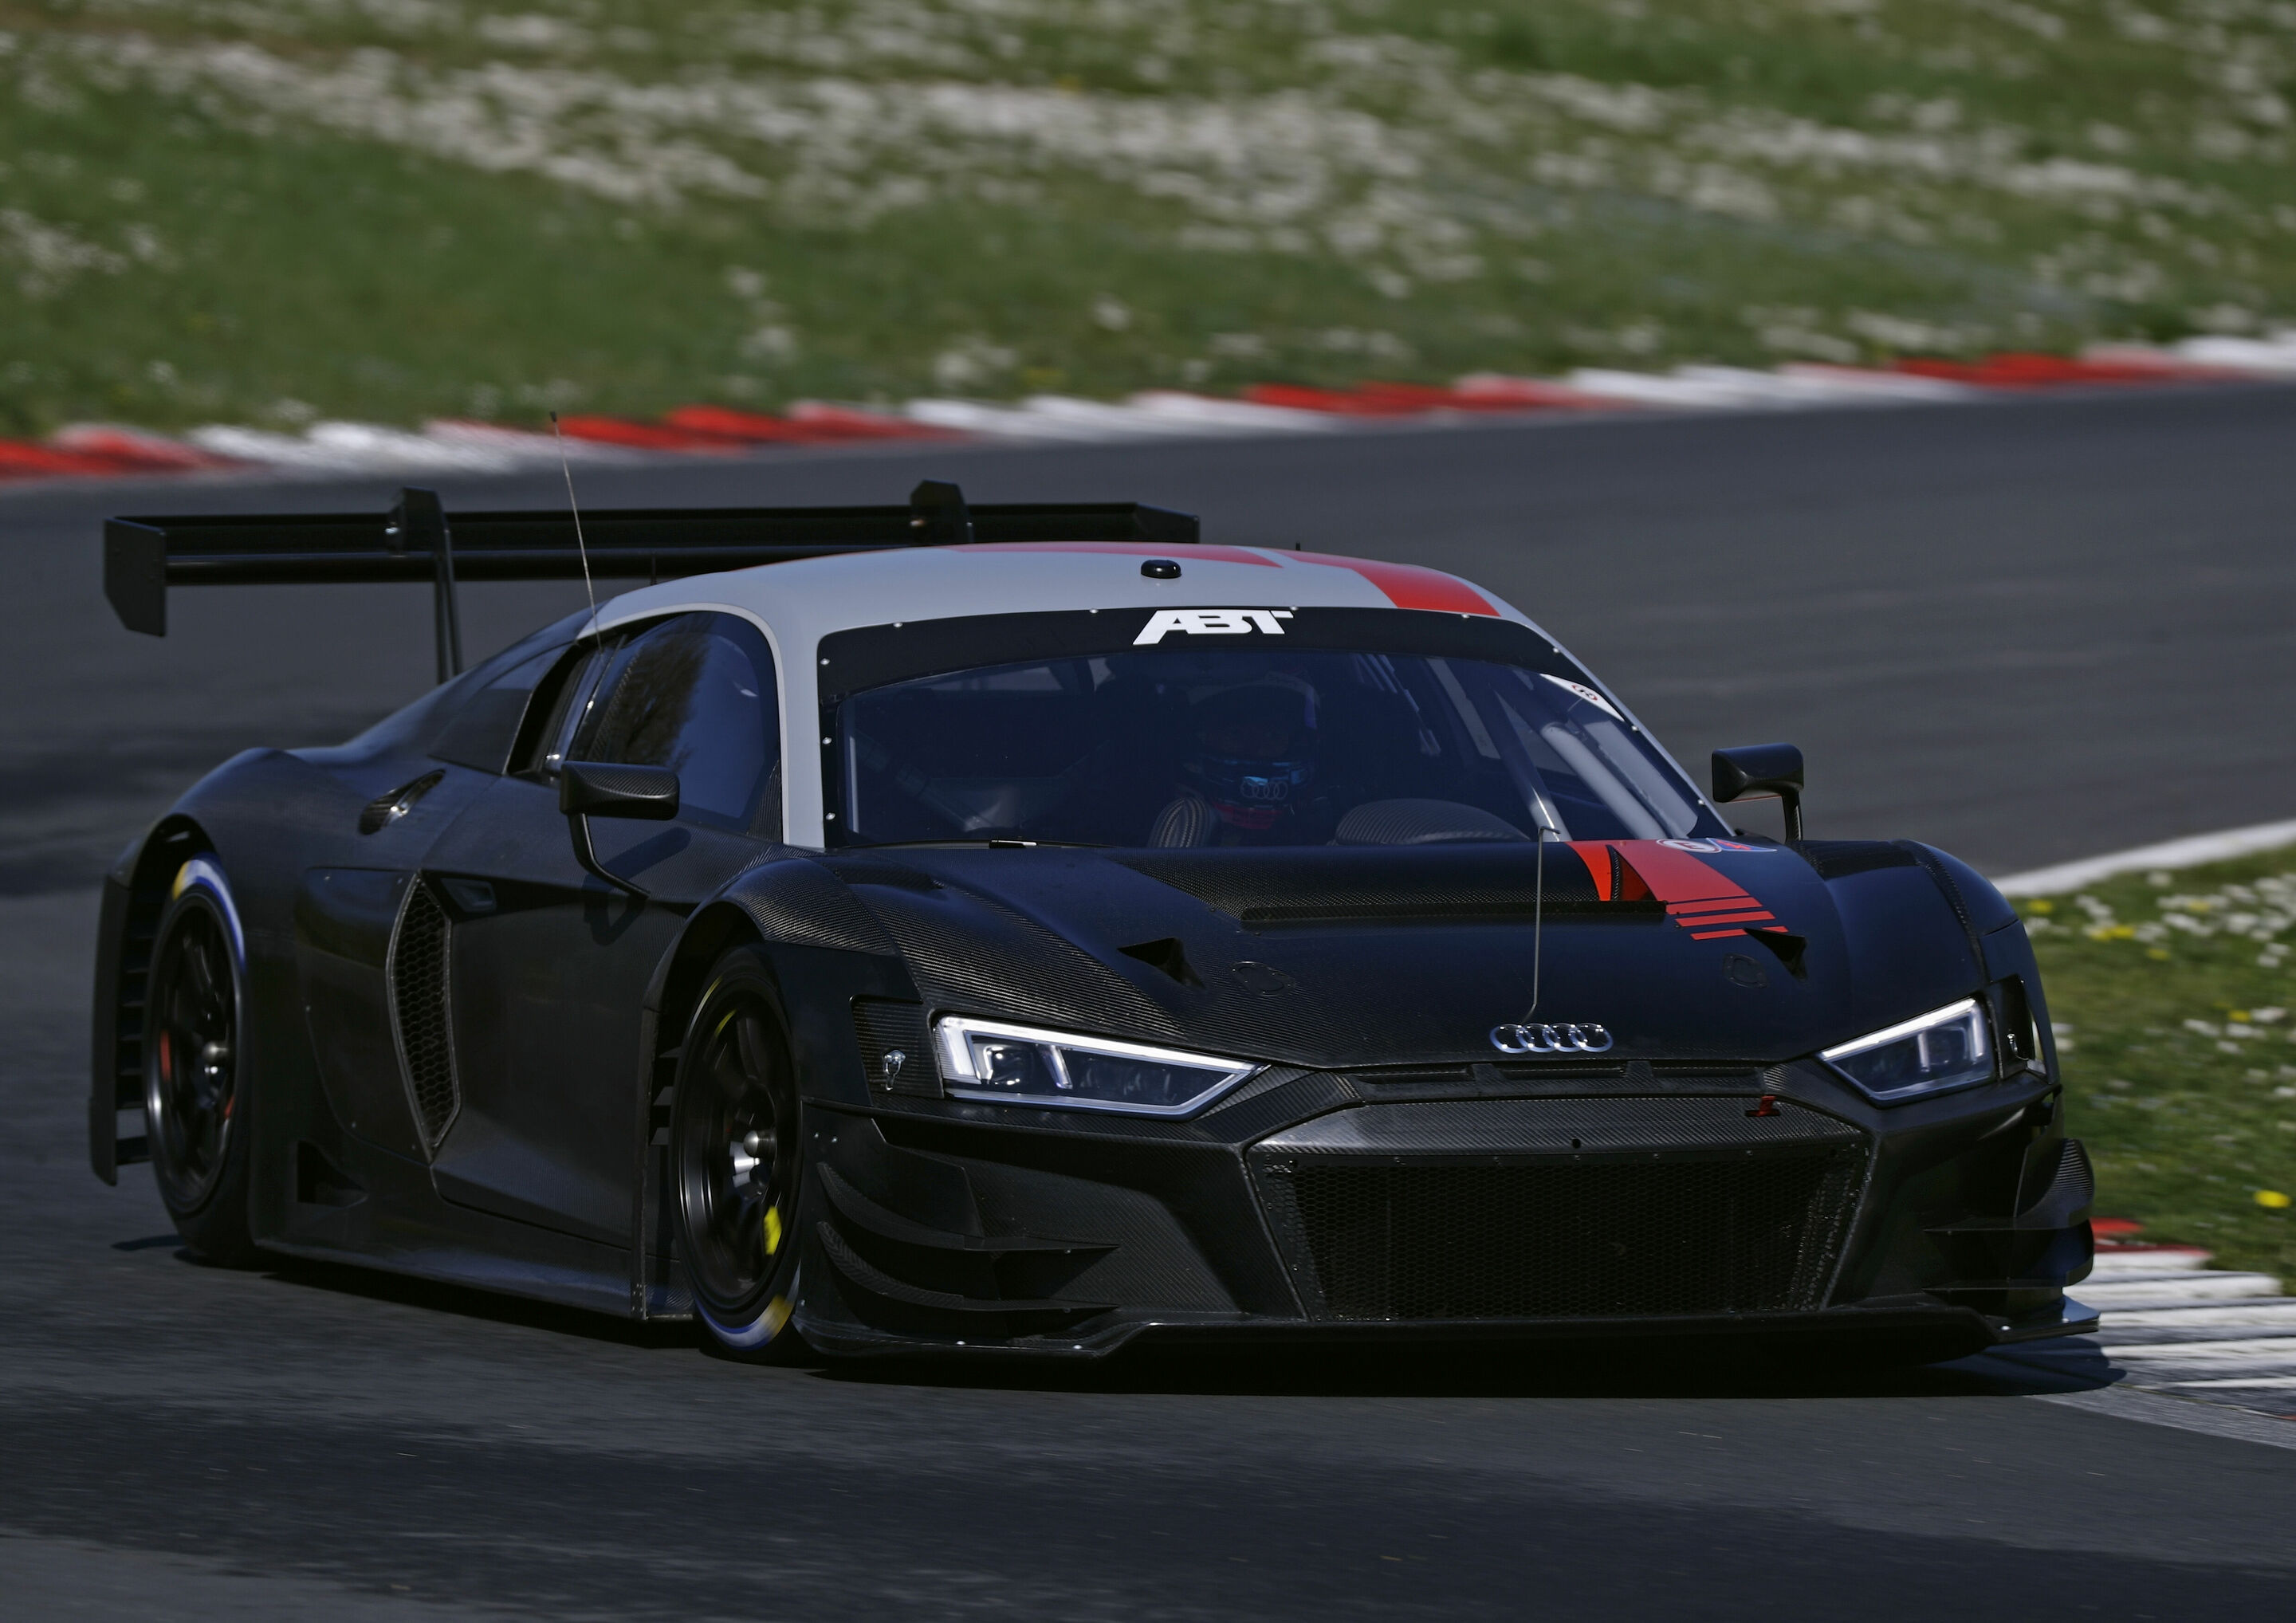 Audi Sport customer racing Vallelunga 2021 test